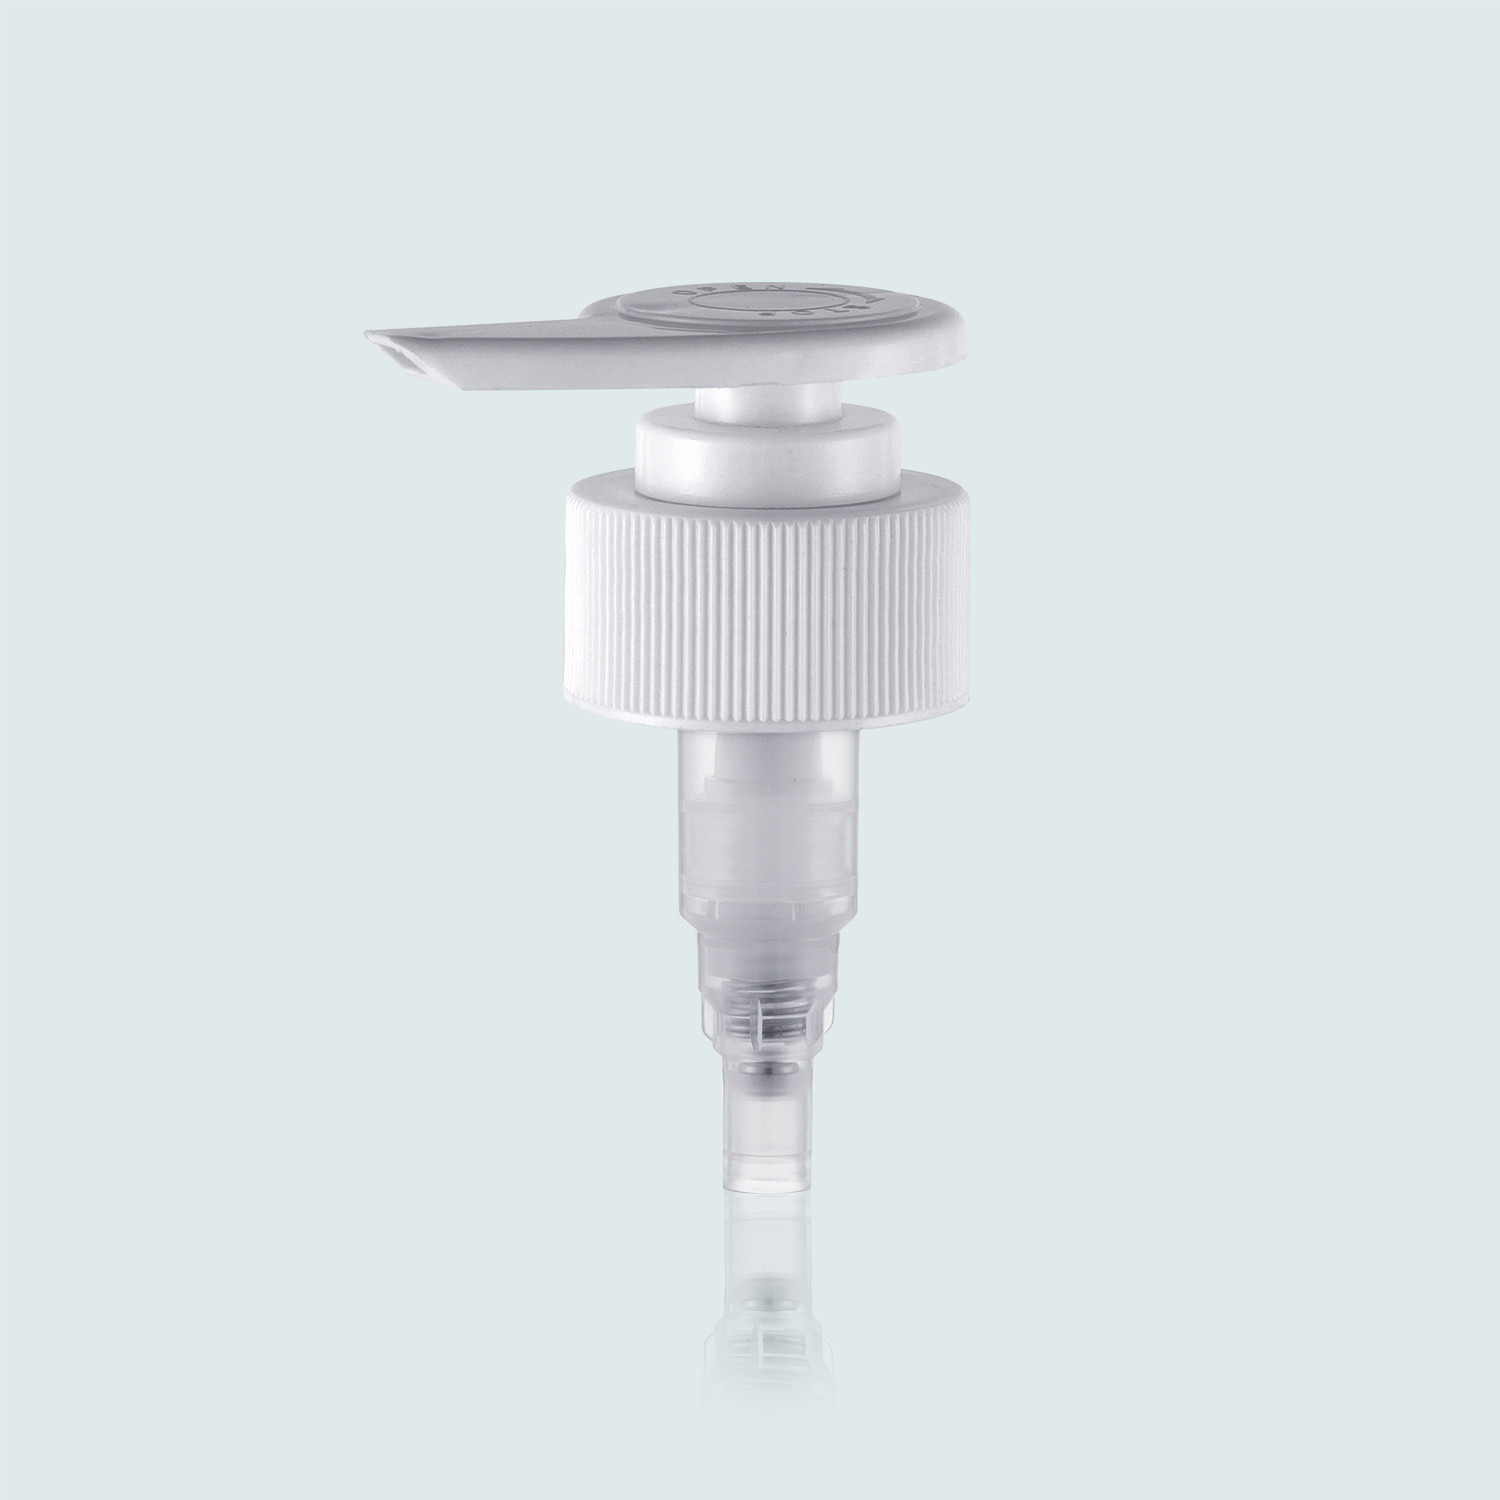  24mm 28mm Plastic Lotion Dispenser Pump / Liquid Dispenser For Shampoo Bottle JY327-08 Manufactures